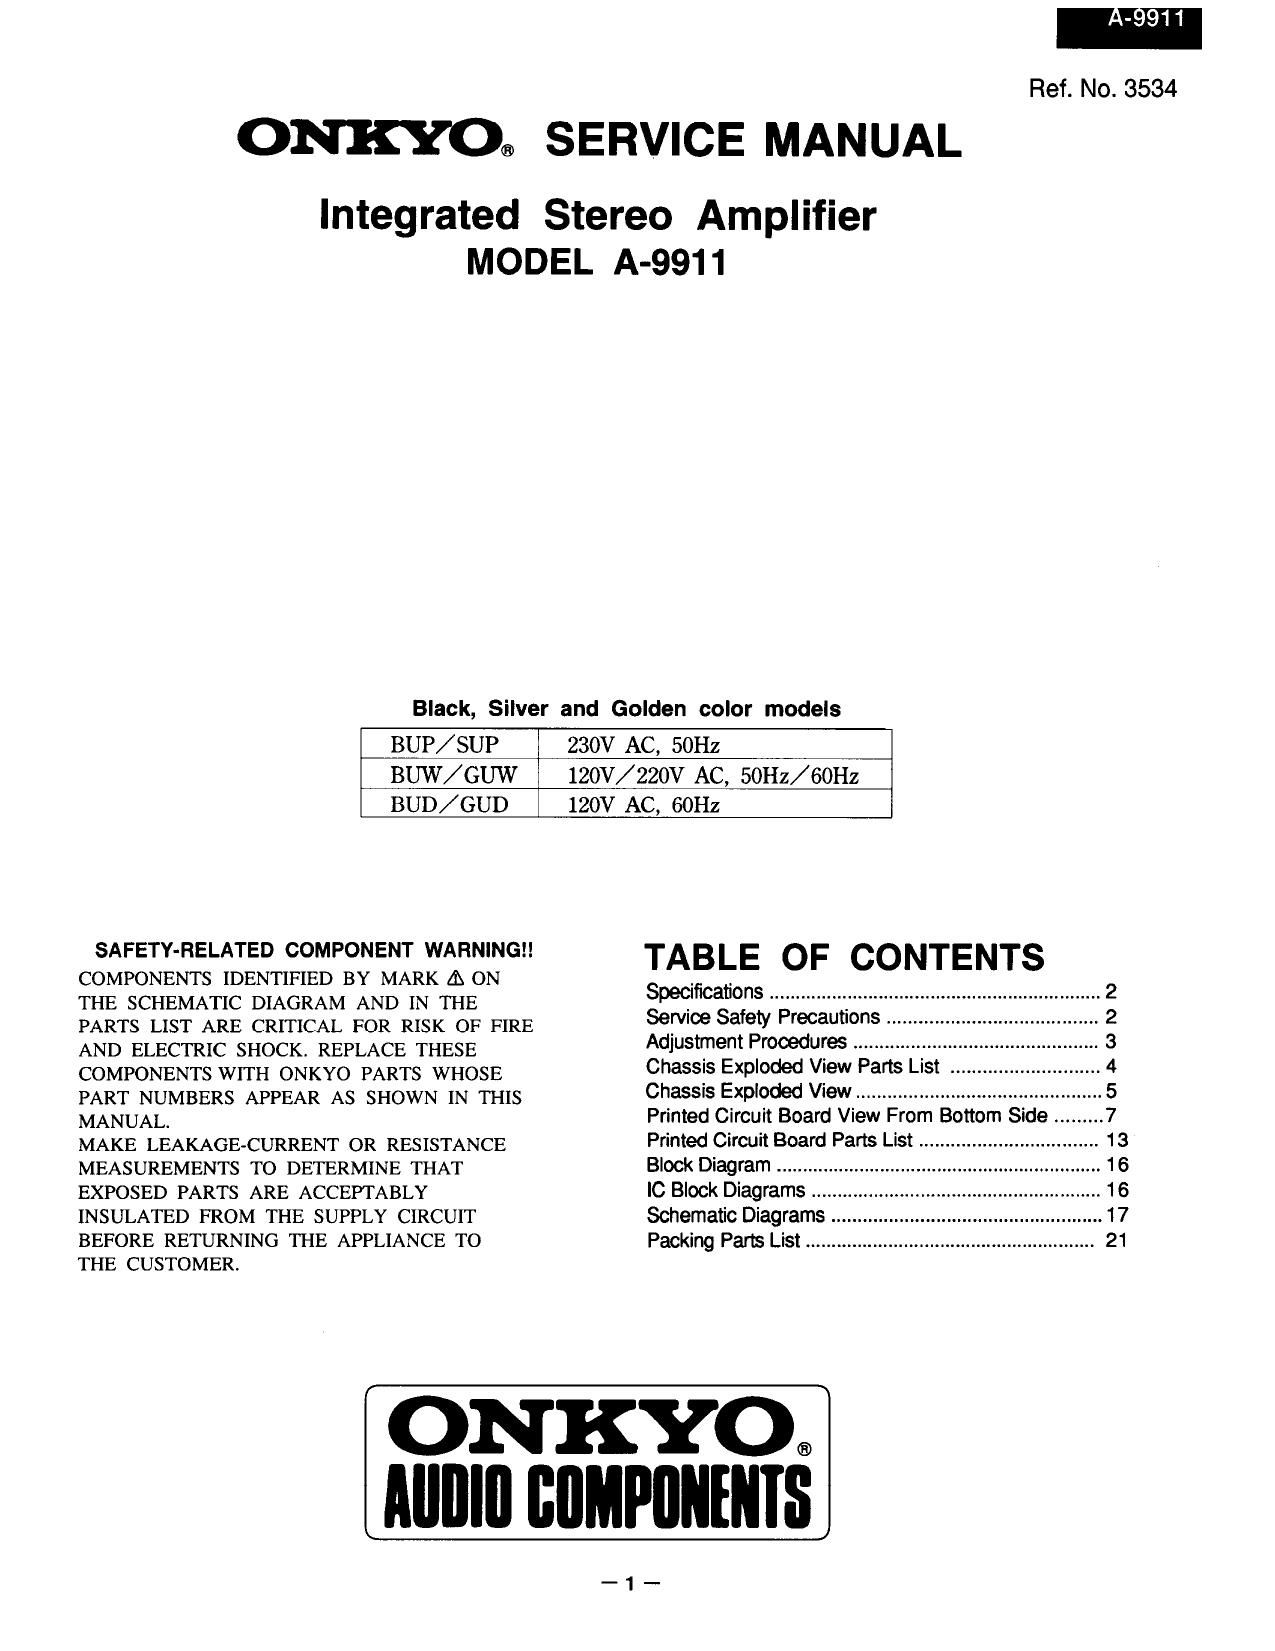 Onkyo A 9911 Service Manual